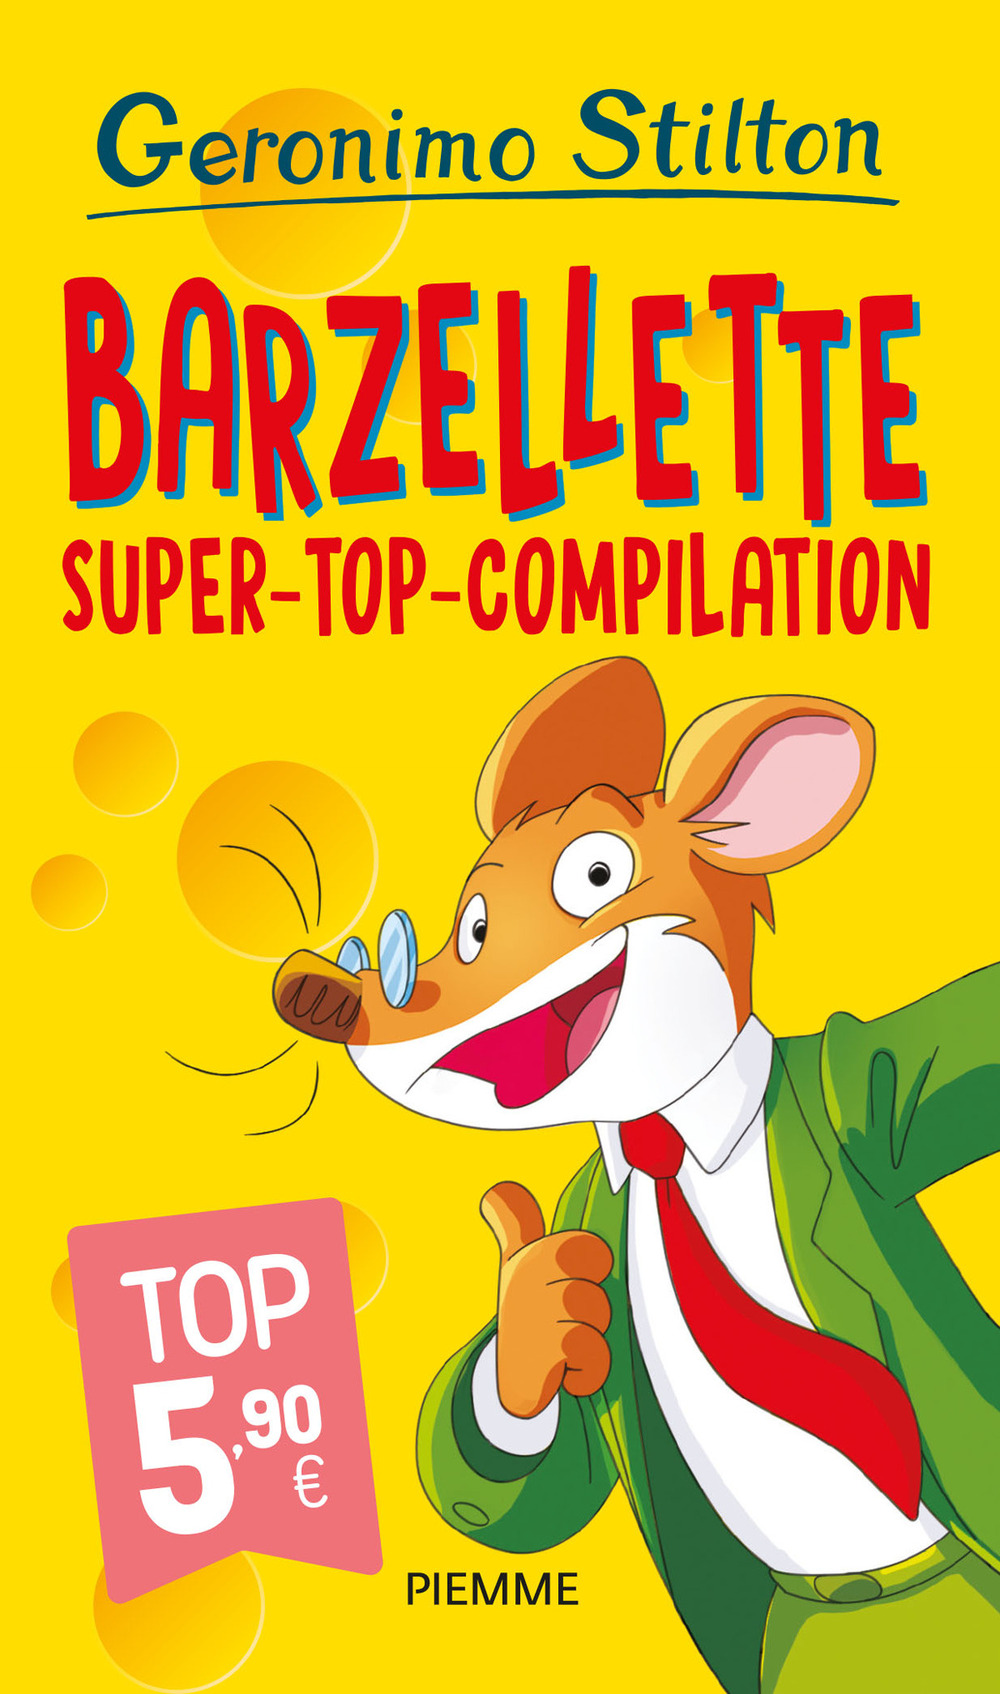 Barzellette. Super-top-compilation